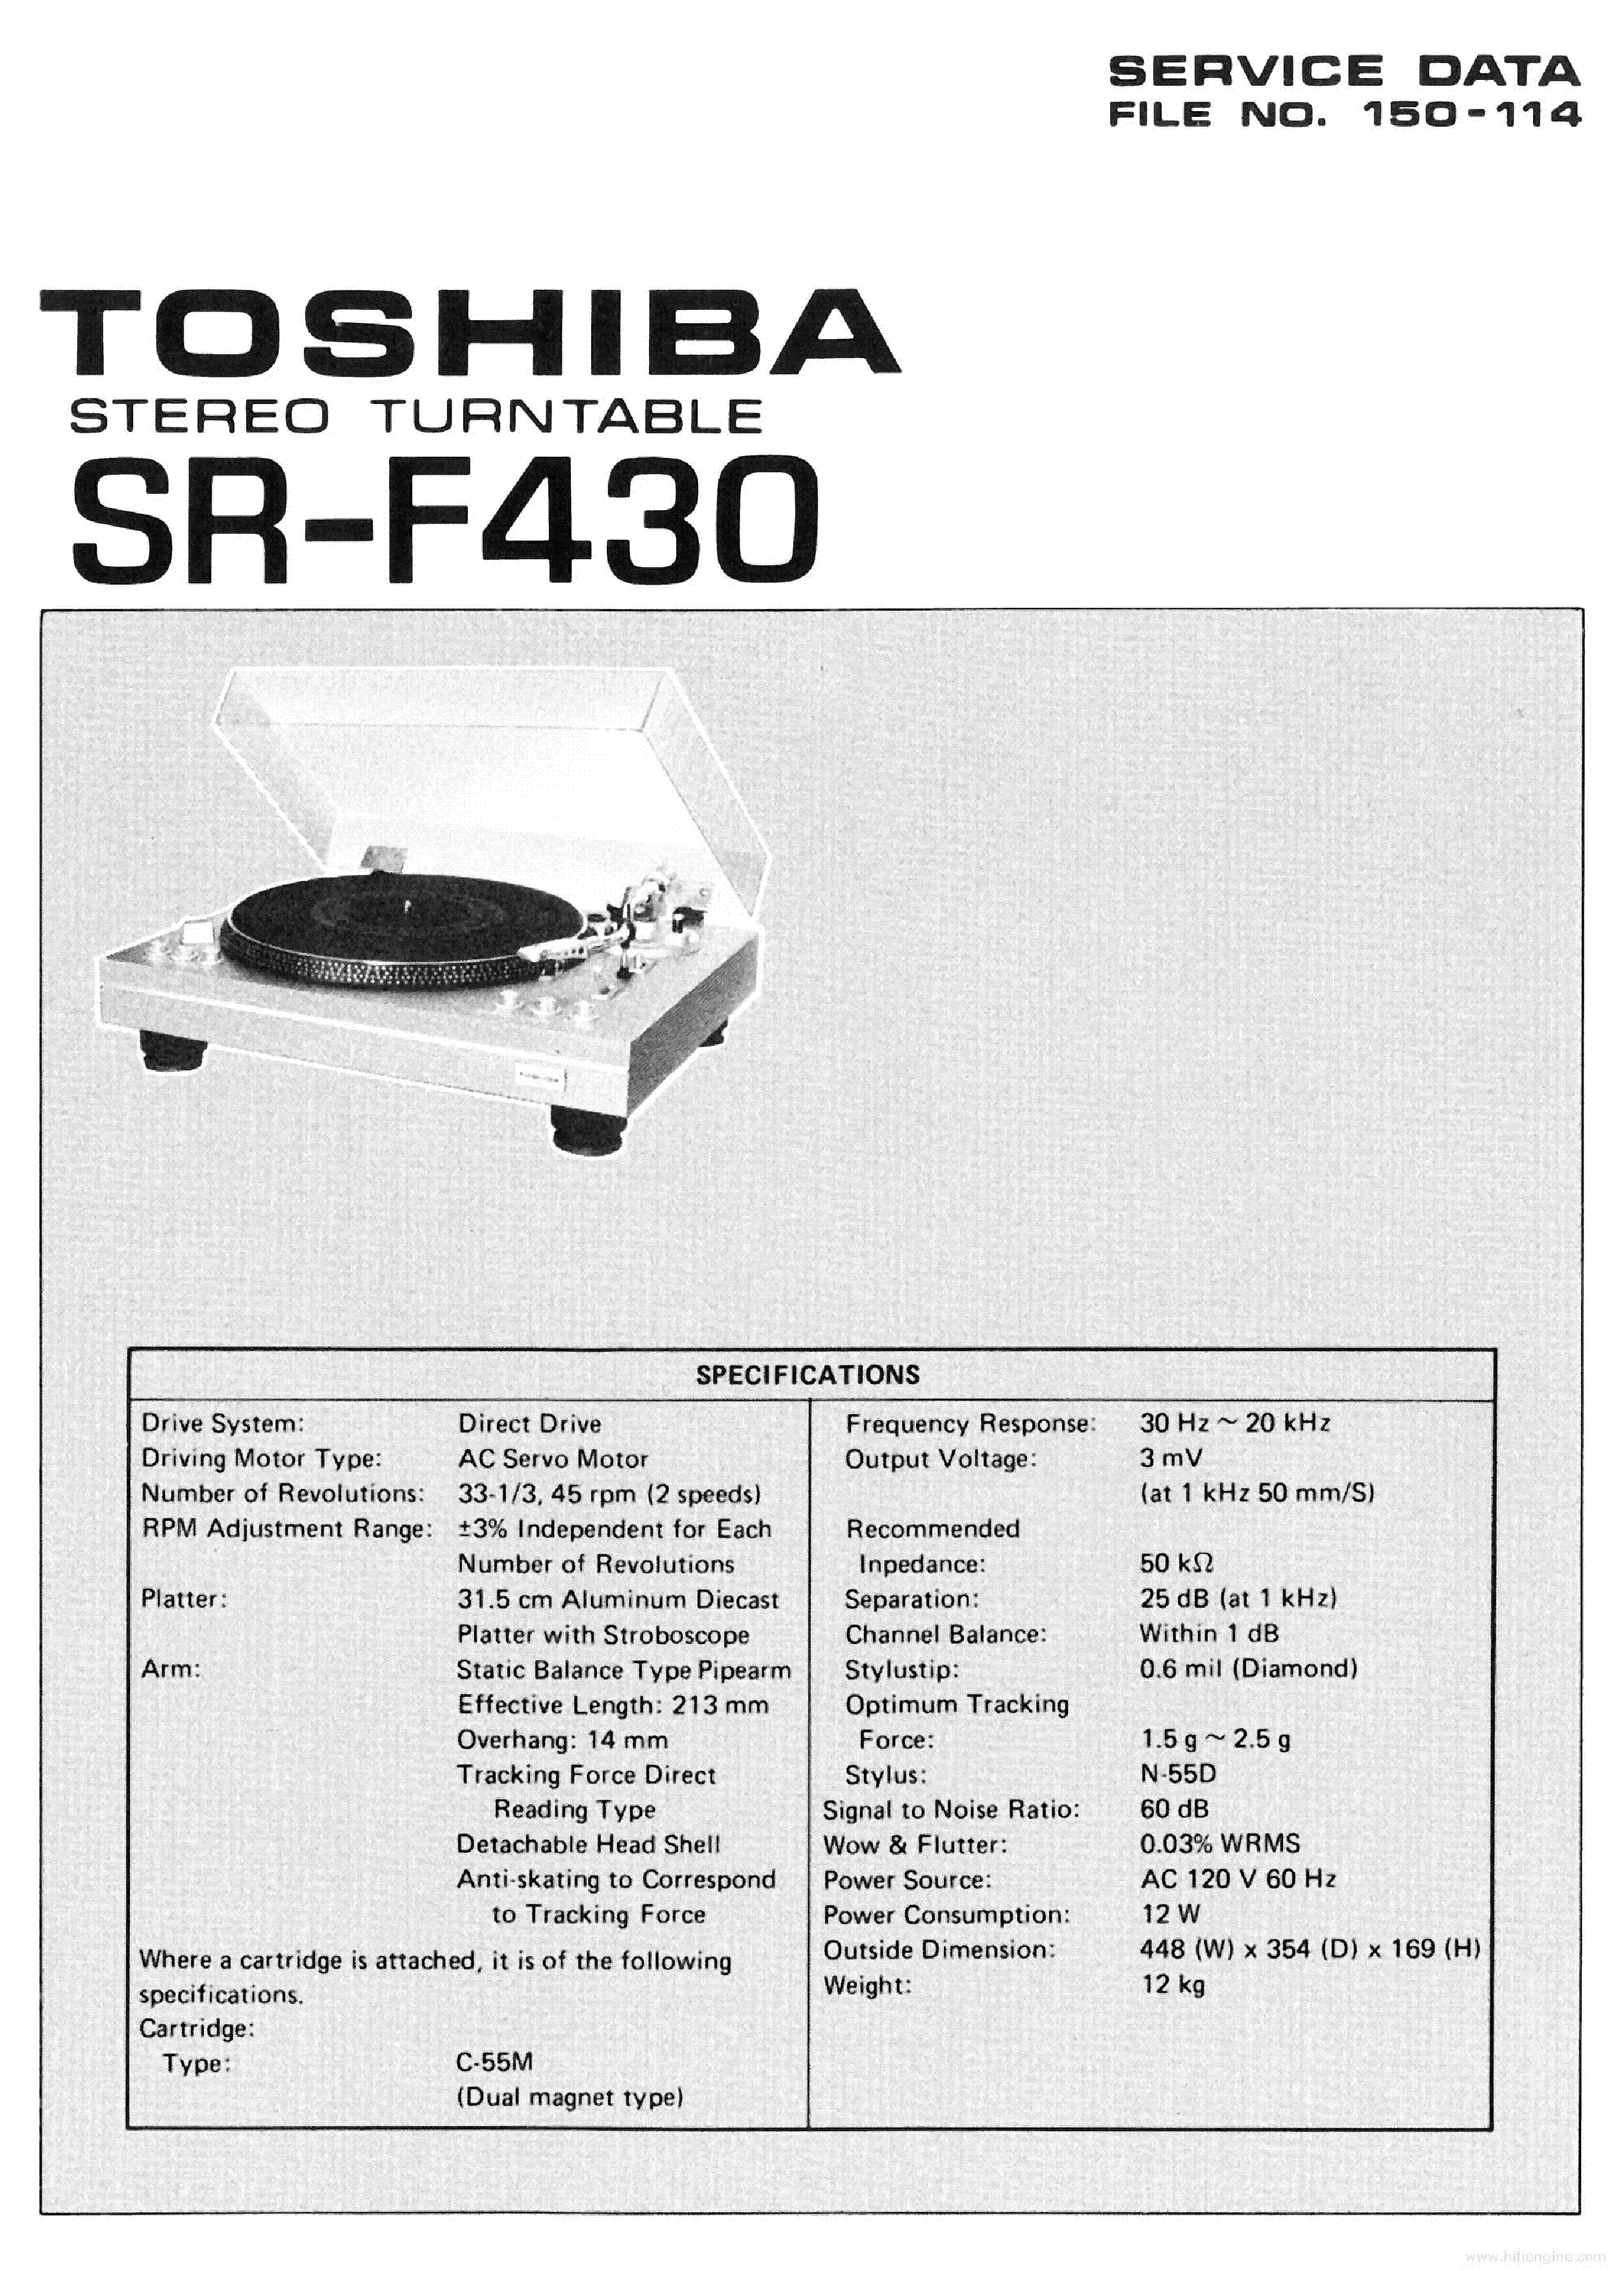 TOSHIBA SR-F430 TURNTABLE service manual (1st page)